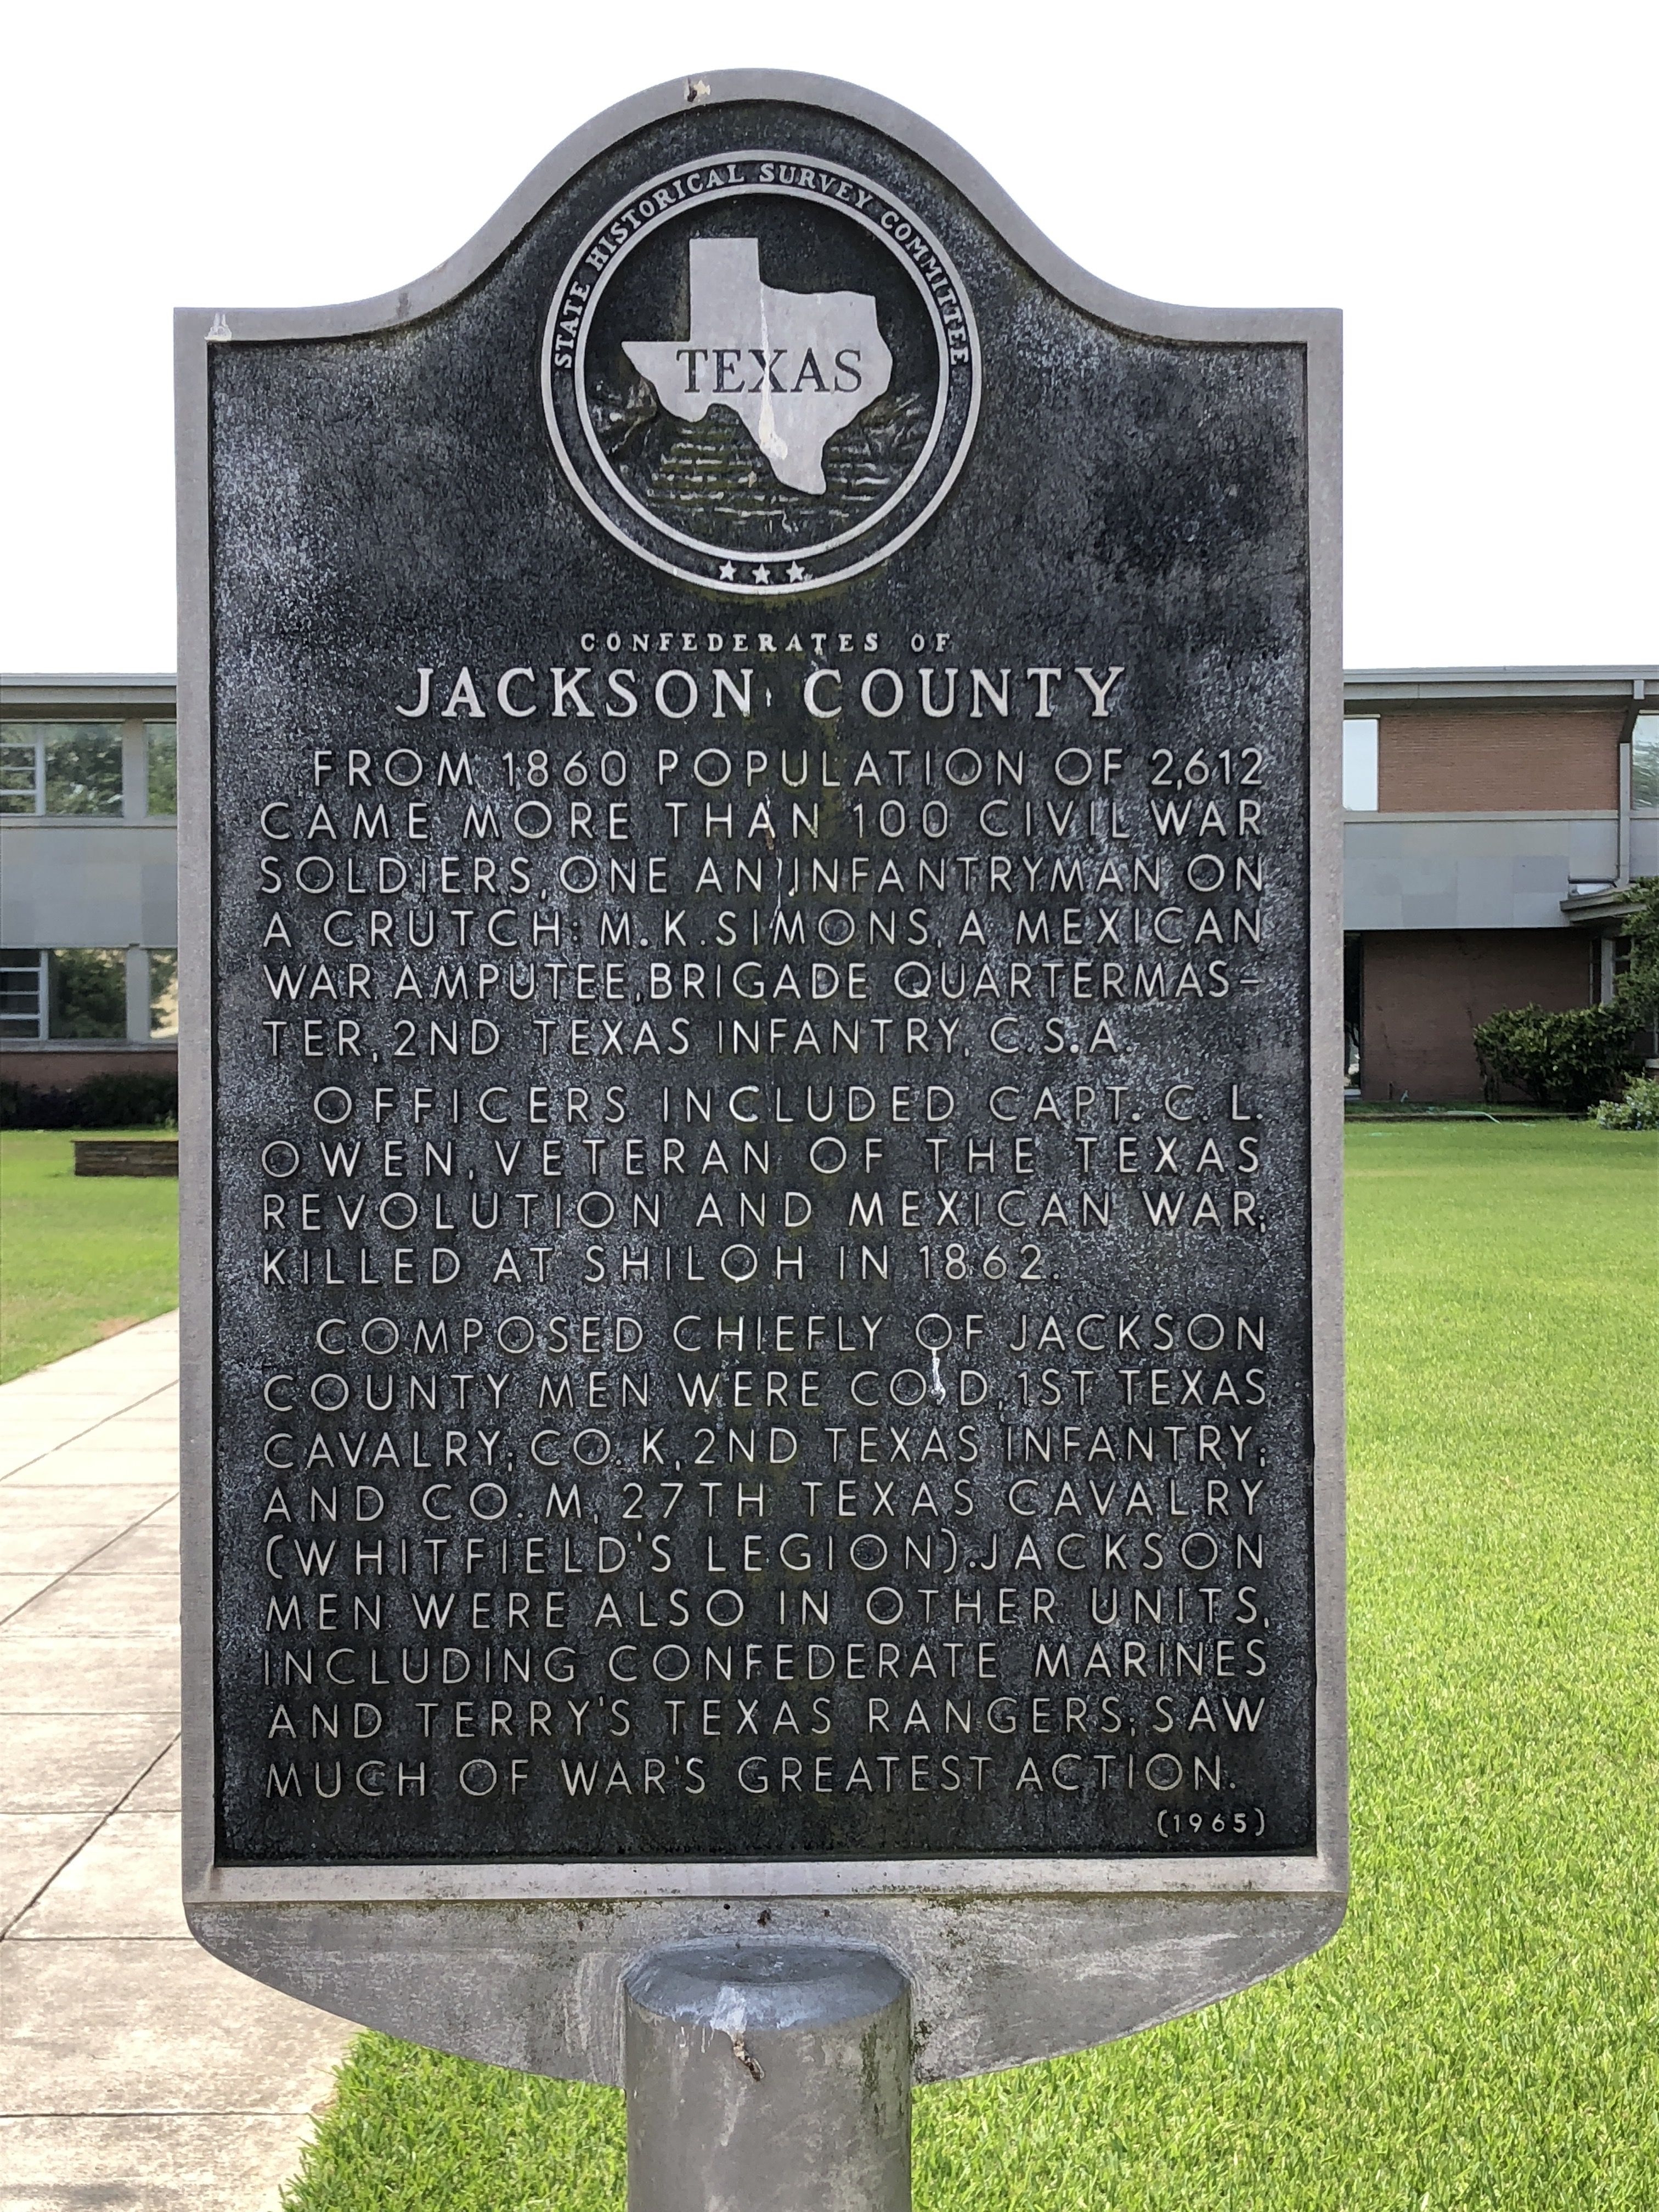 Confederates of Jackson County Marker